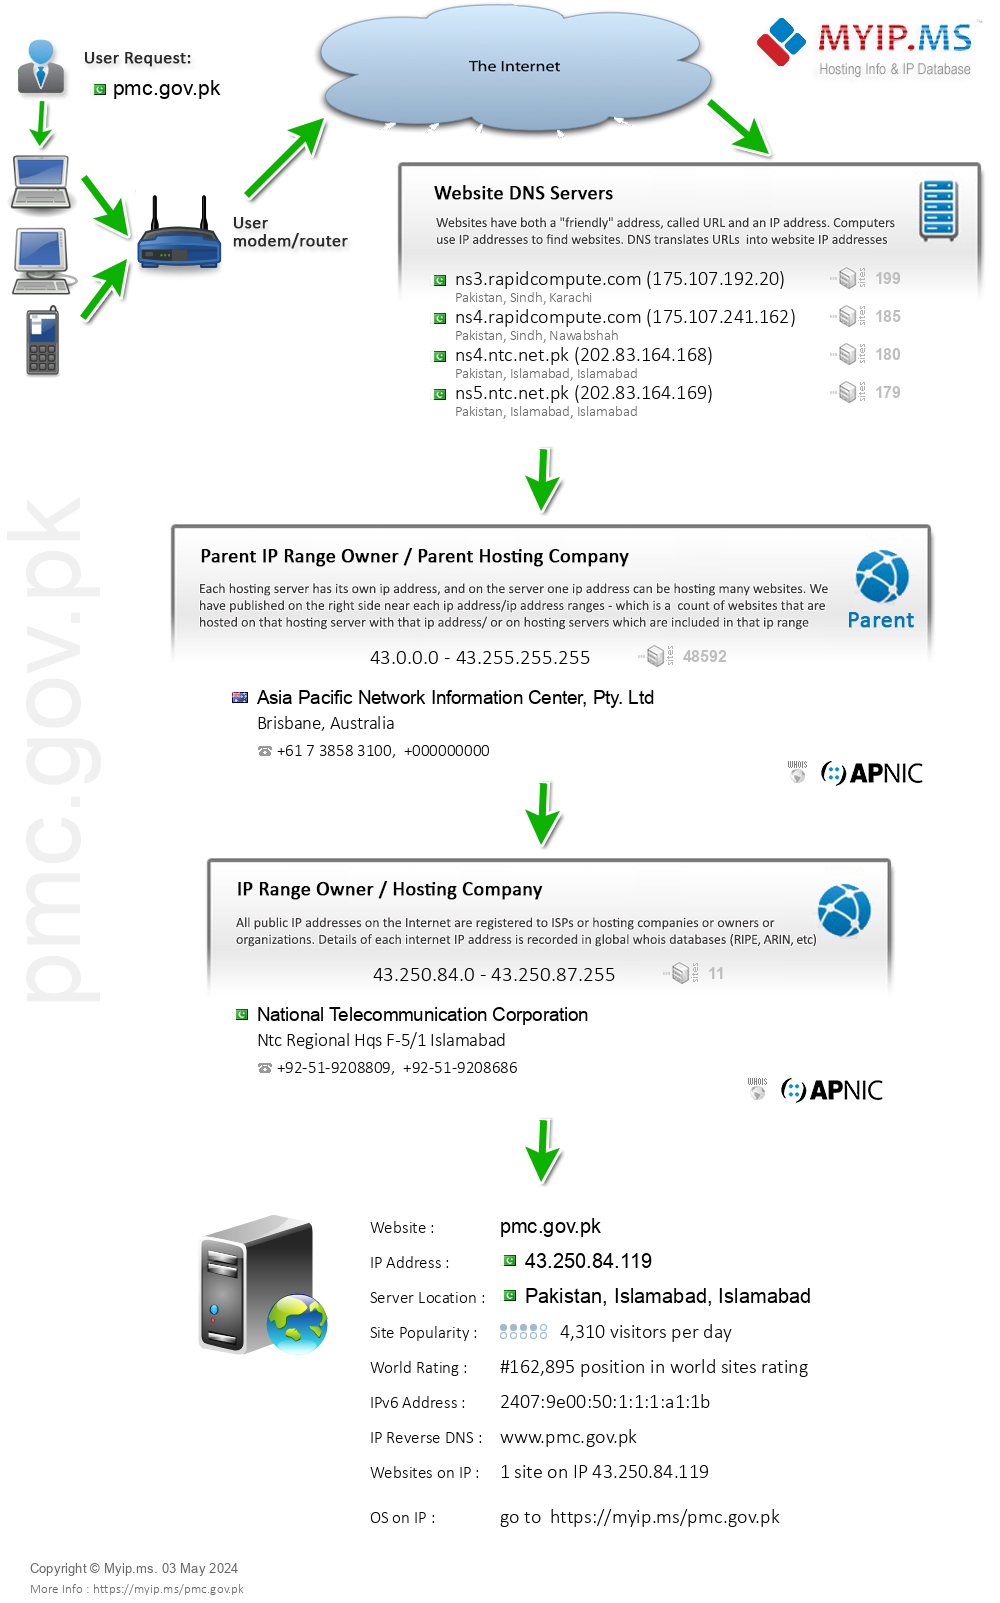 Pmc.gov.pk - Website Hosting Visual IP Diagram